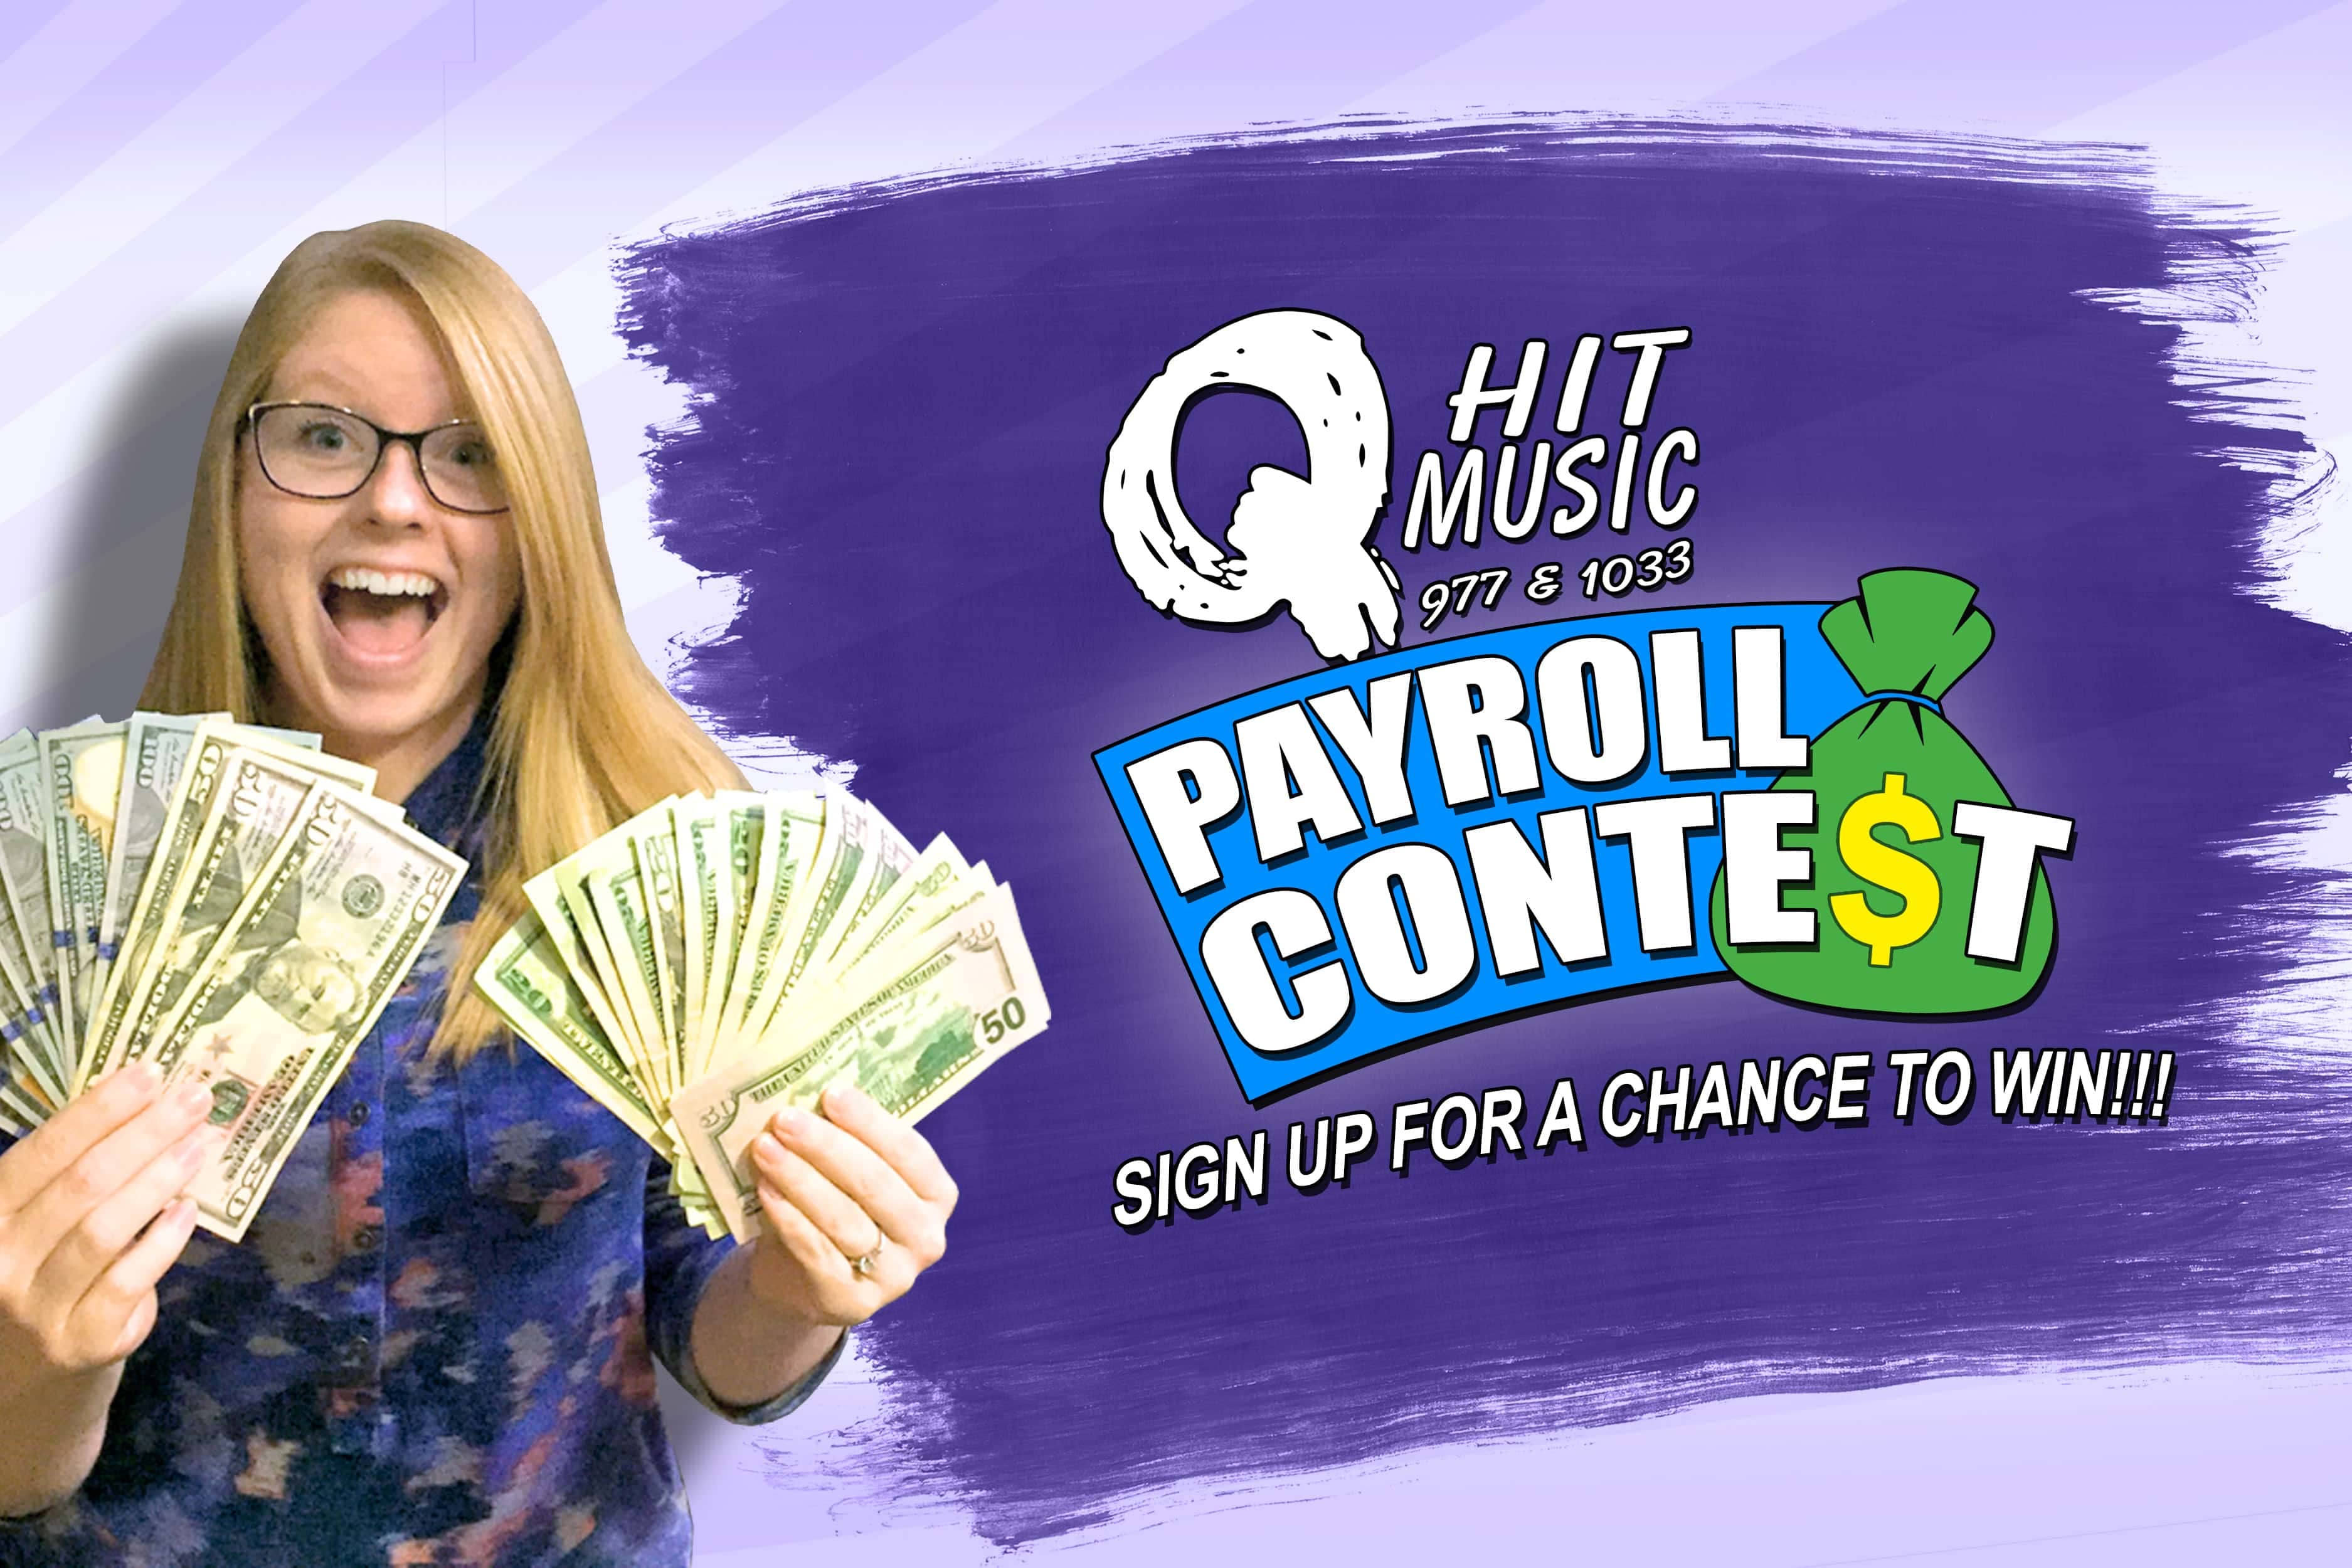 2019-payroll-contest